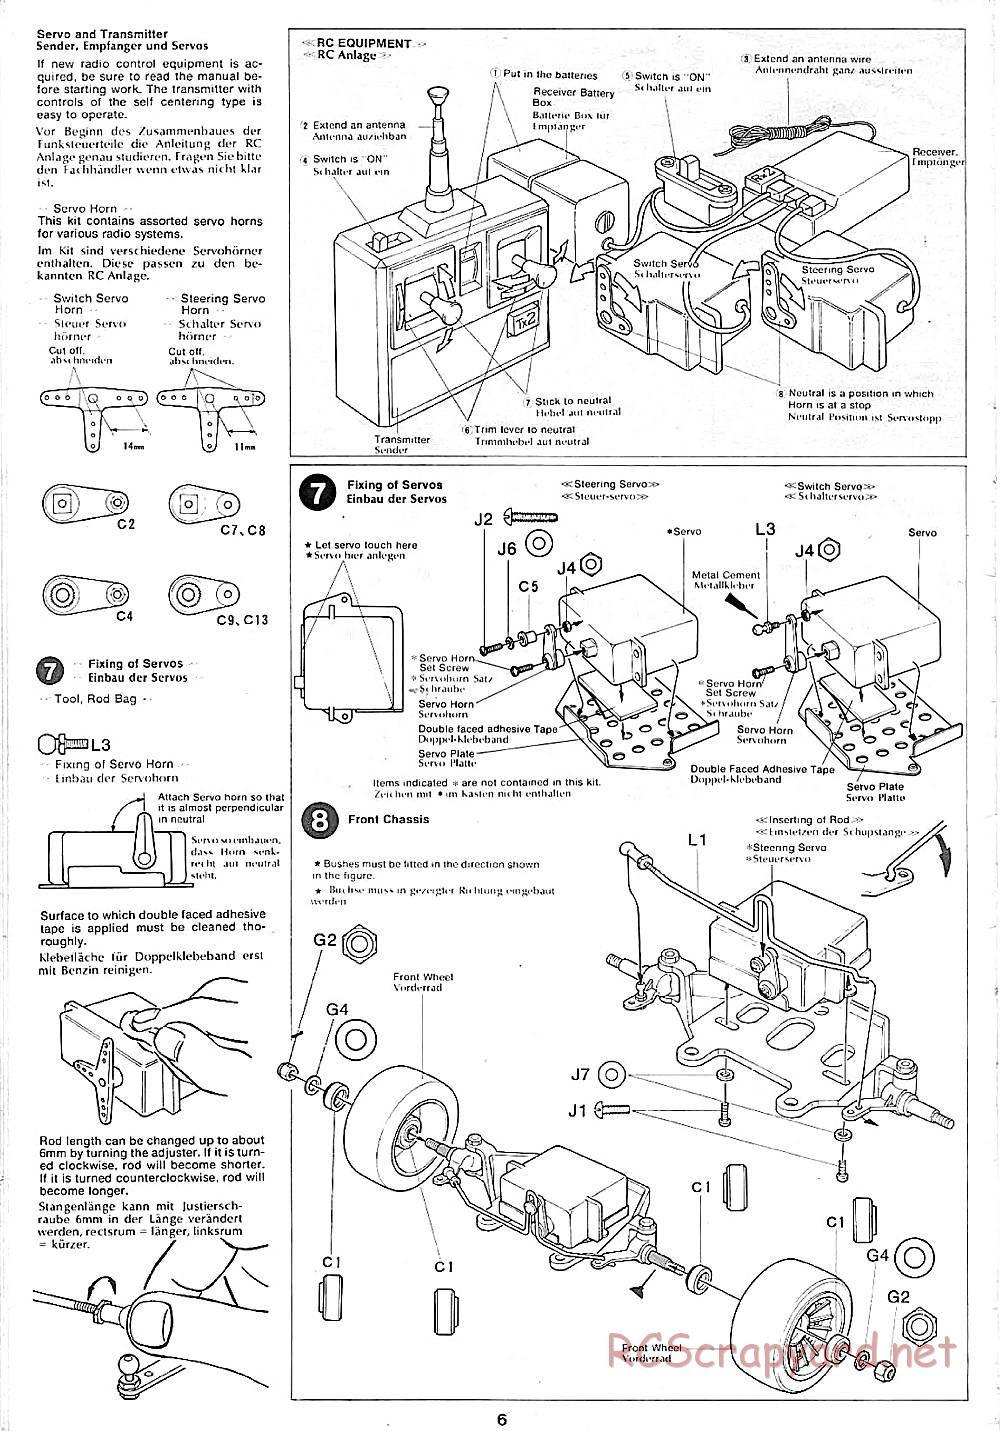 Tamiya - Martini Mk22 Renault (F2) - 58014 - Manual - Page 6